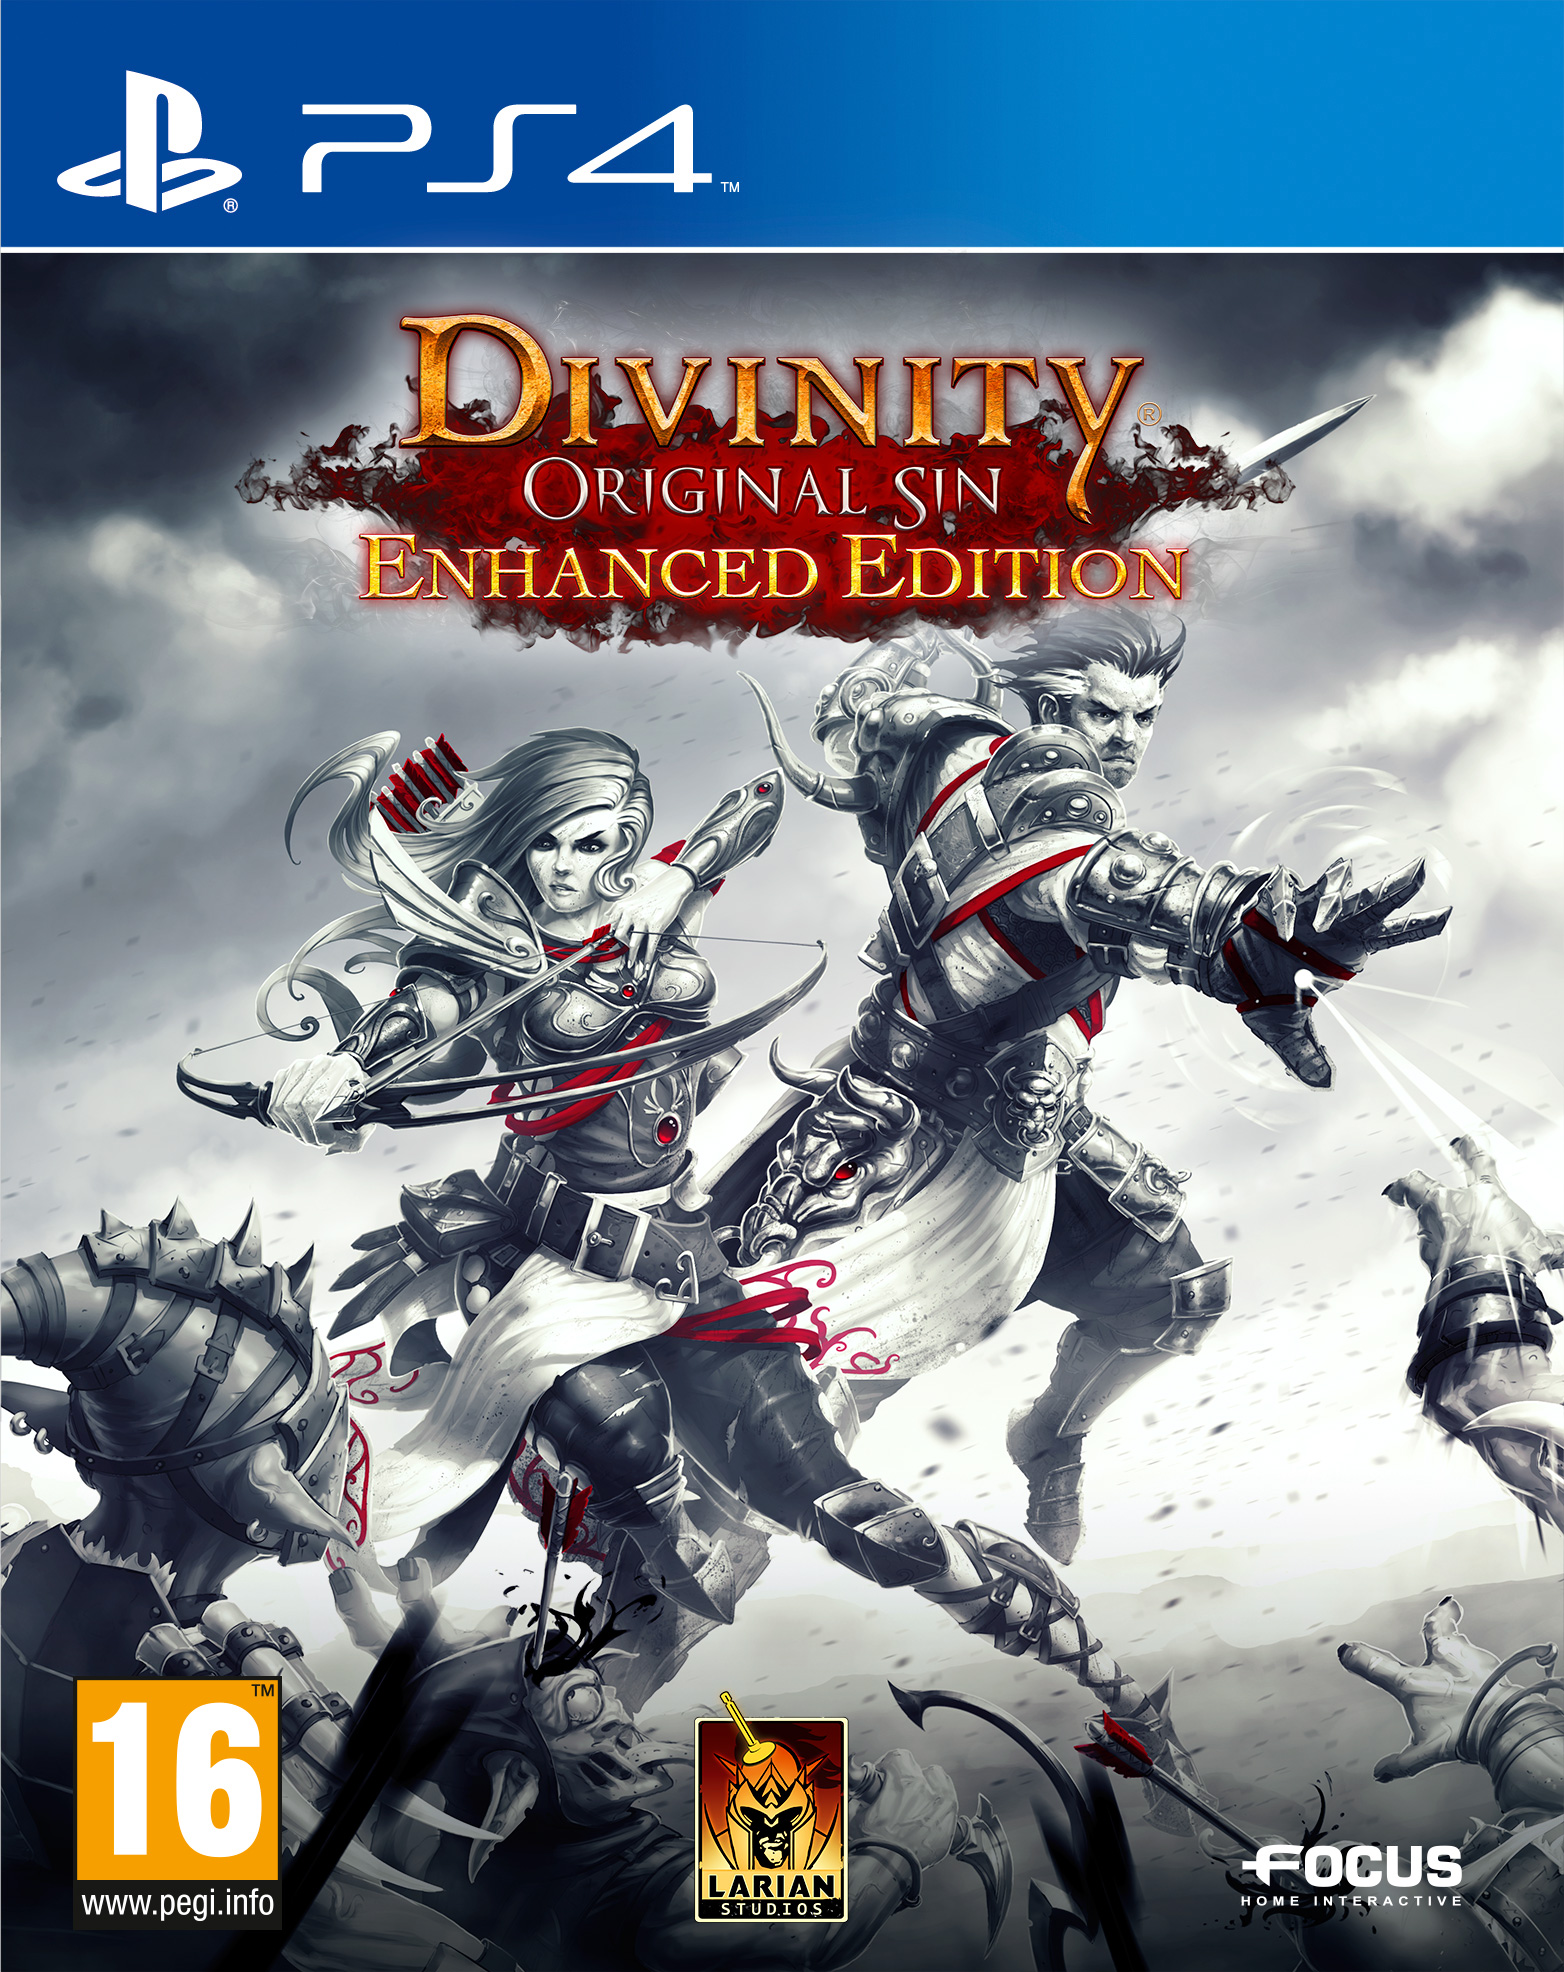 Divinity Original Sin Enhanced Edition Quest Order